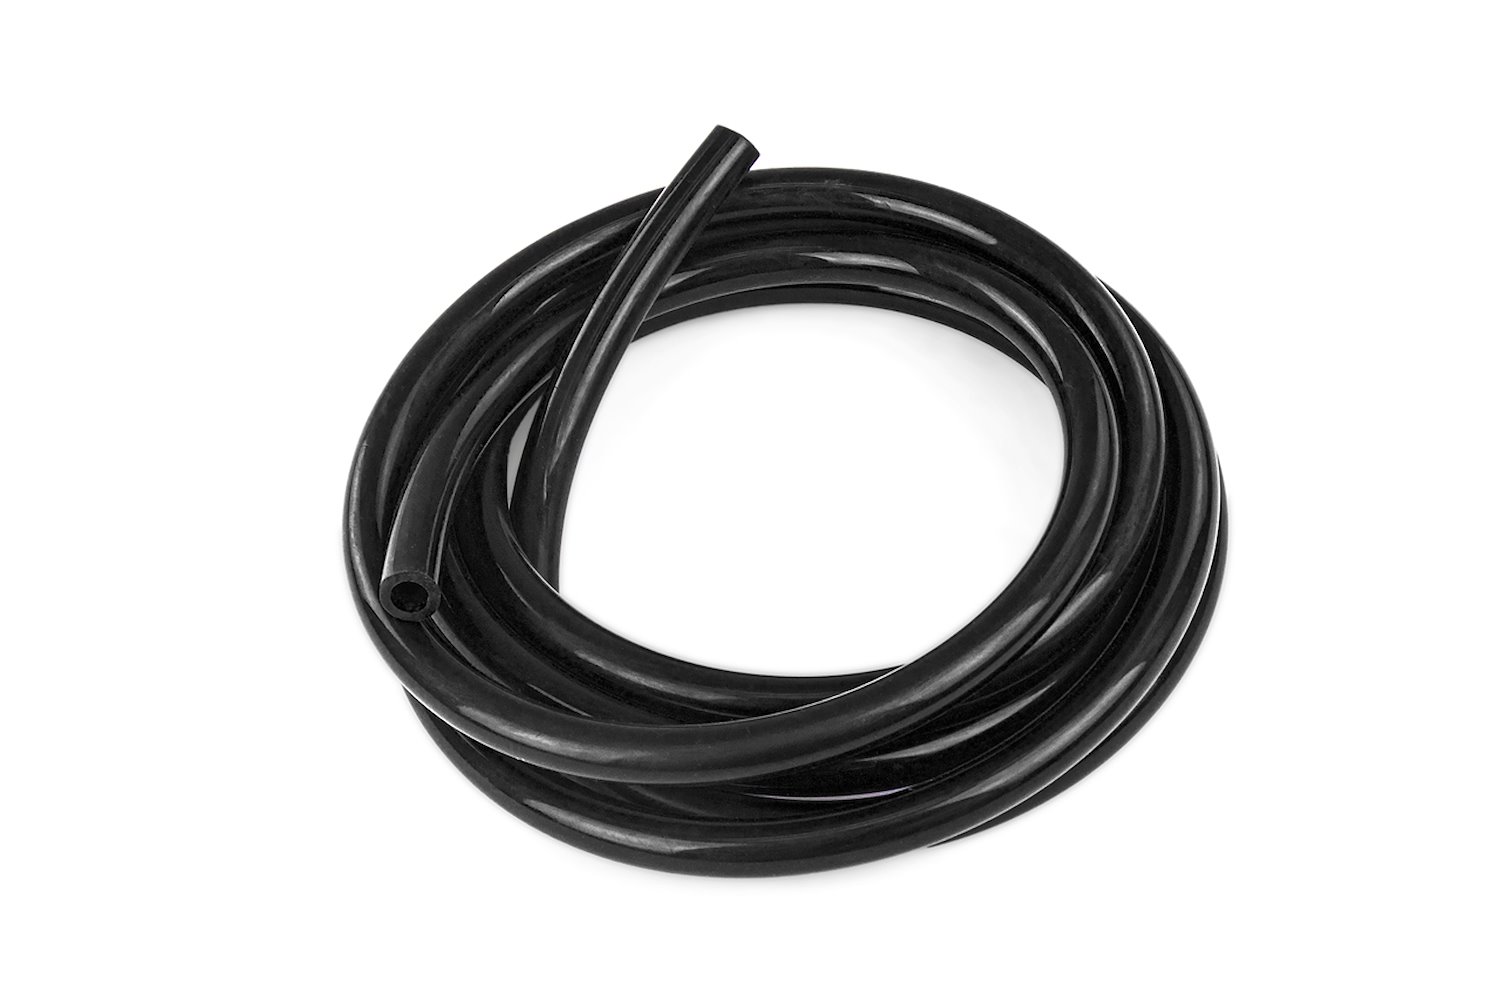 HTSVH8-BLKx10 High-Temperature Silicone Vacuum Hose Tubing, 5/16 in. ID, 10 ft. Roll, Black